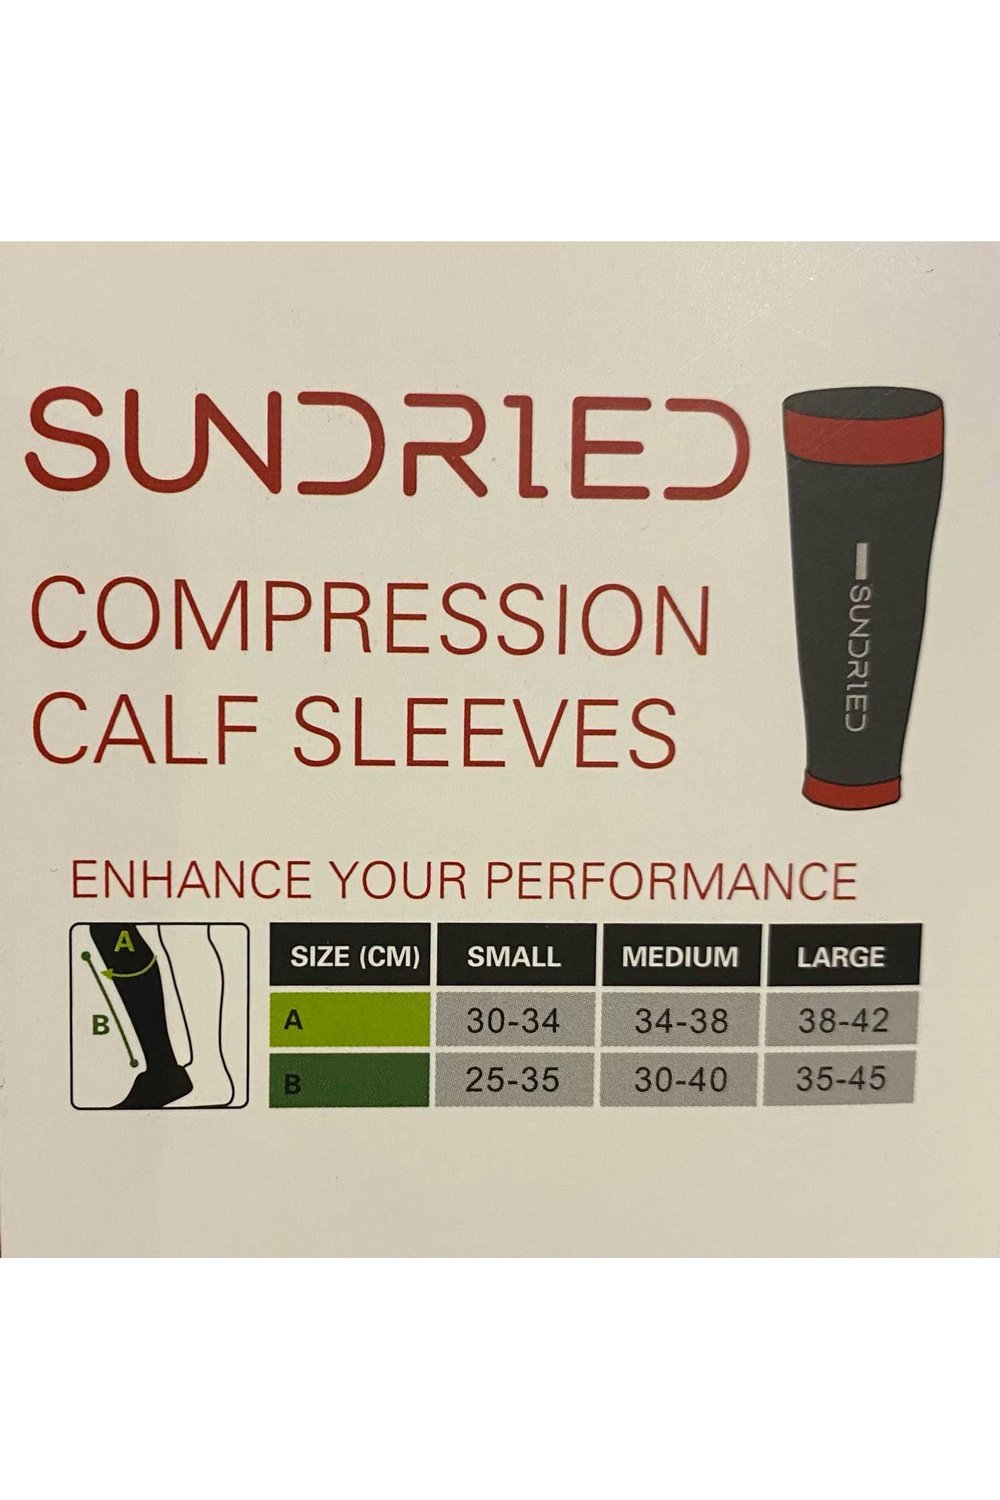 Sundried Compression Calf Sleeve Running Socks Activewear